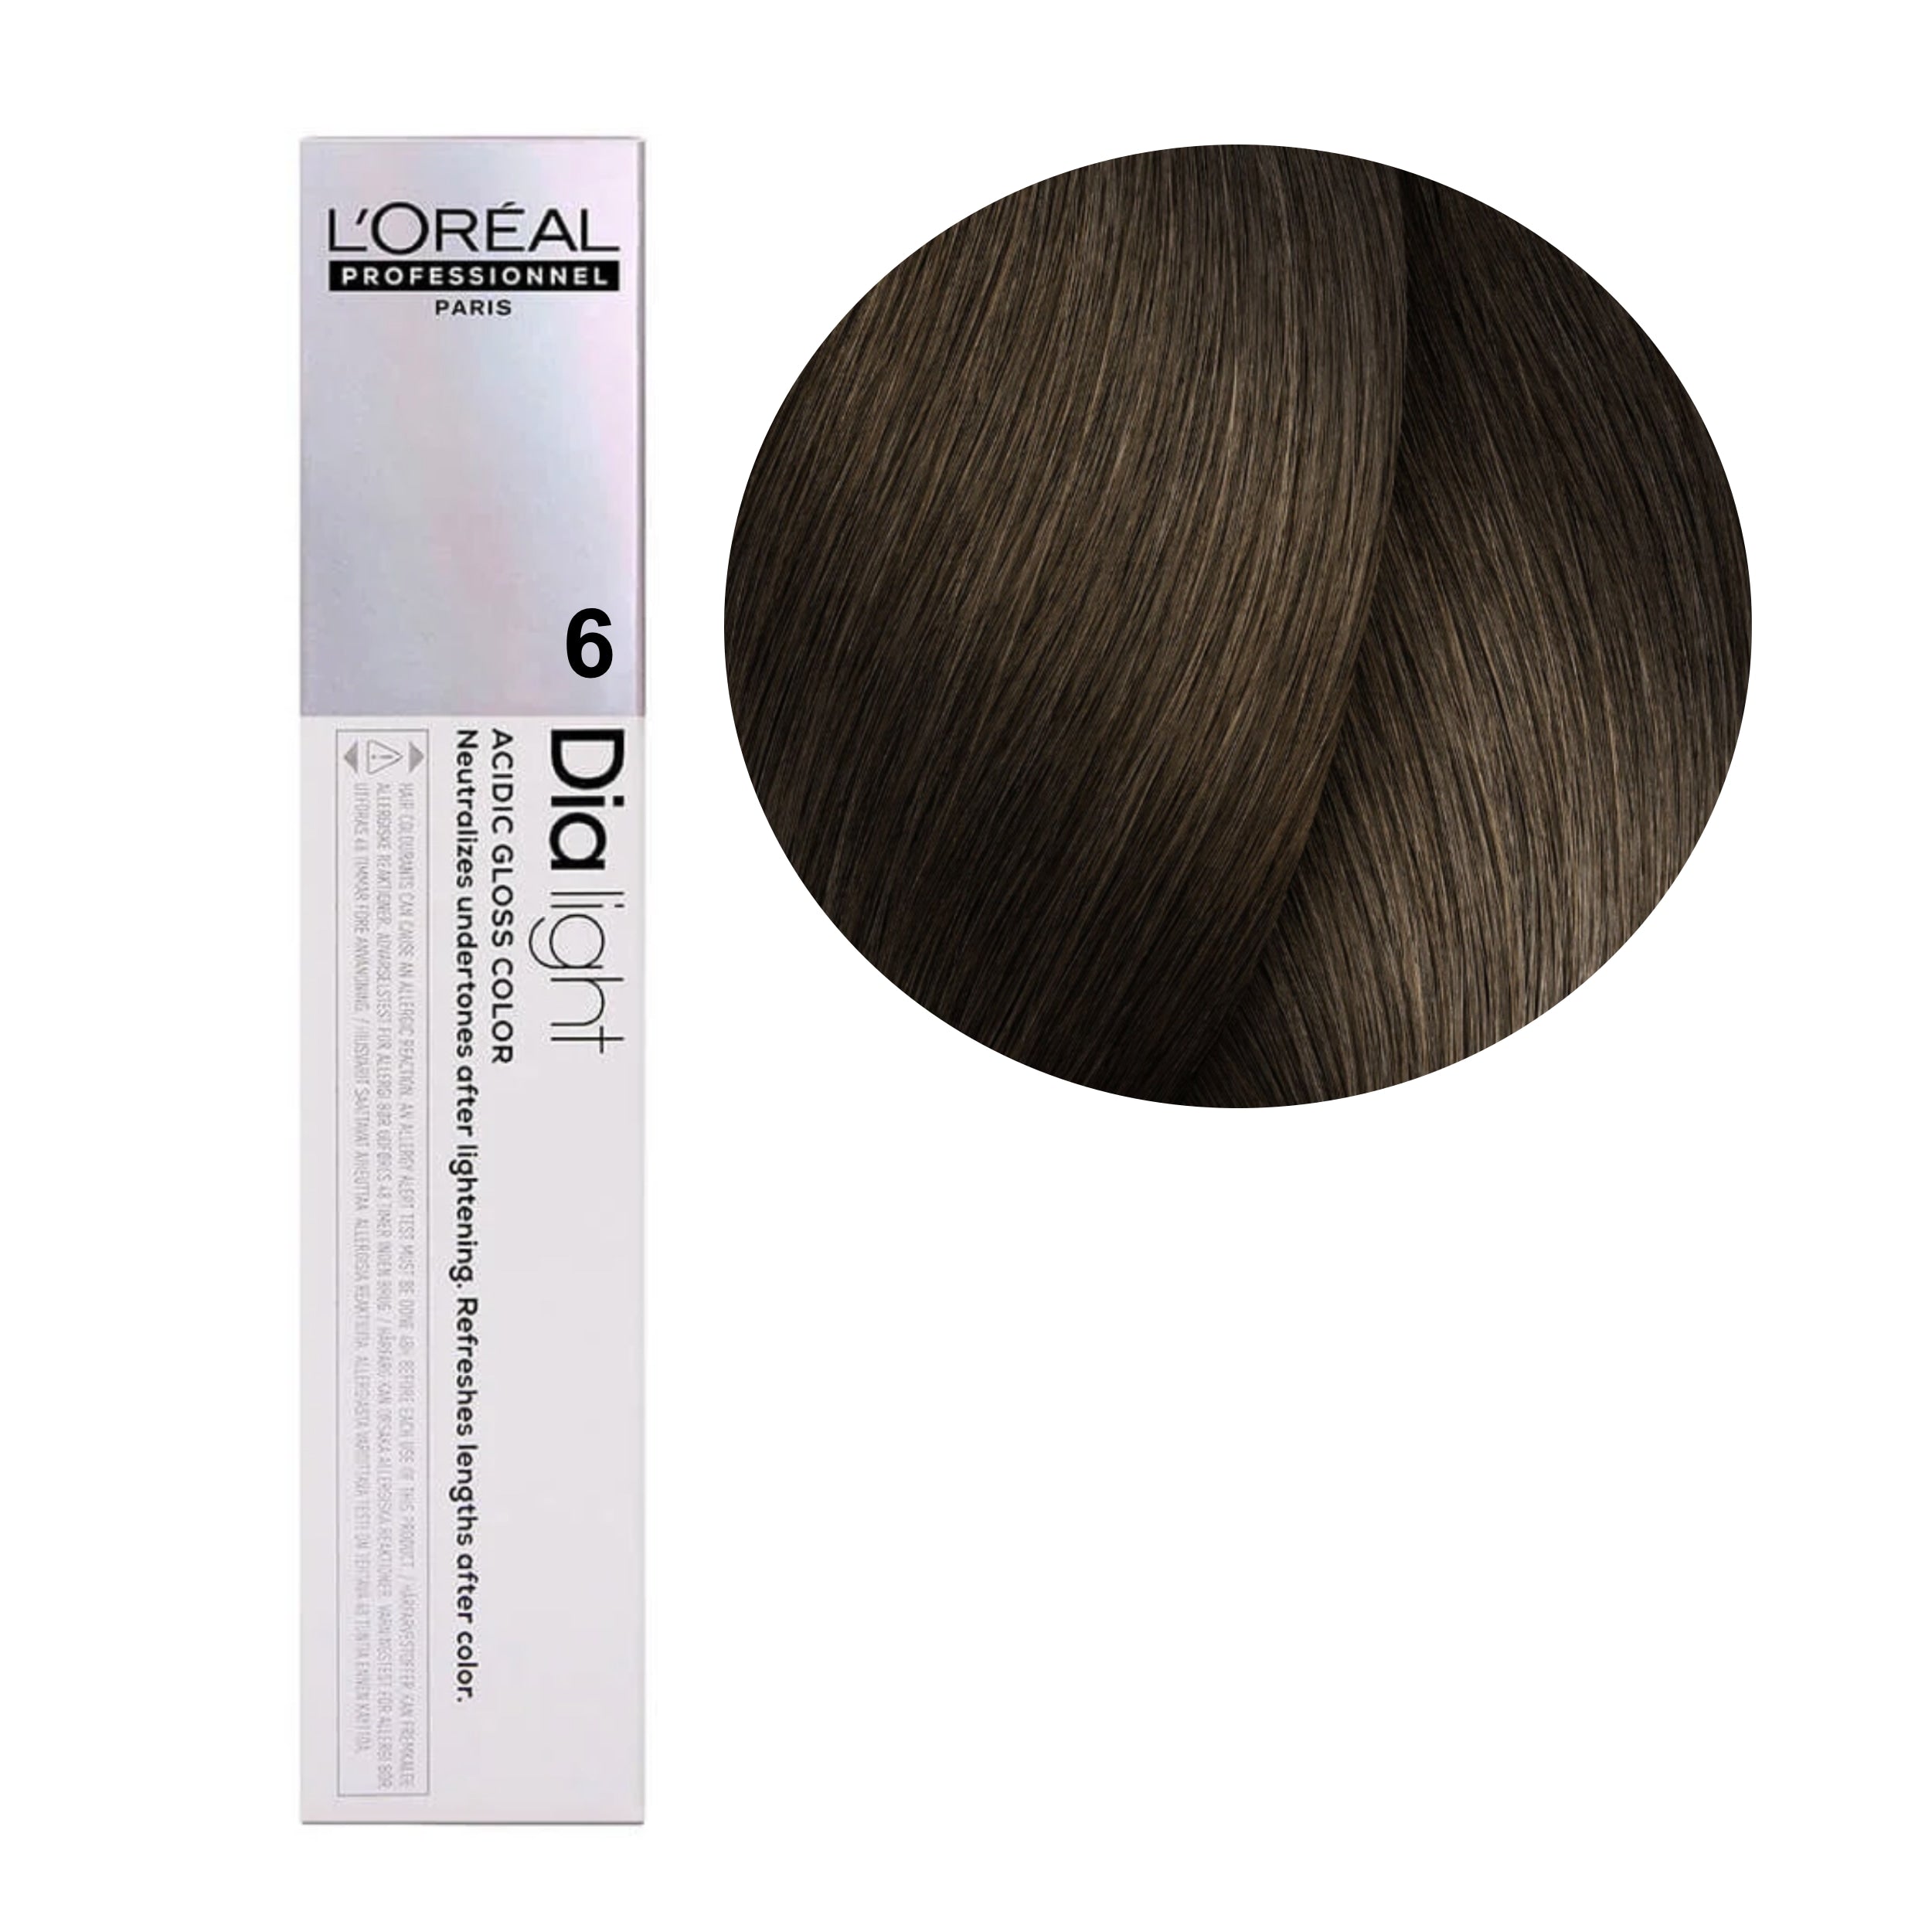 a box of lorel hair color in dark brown